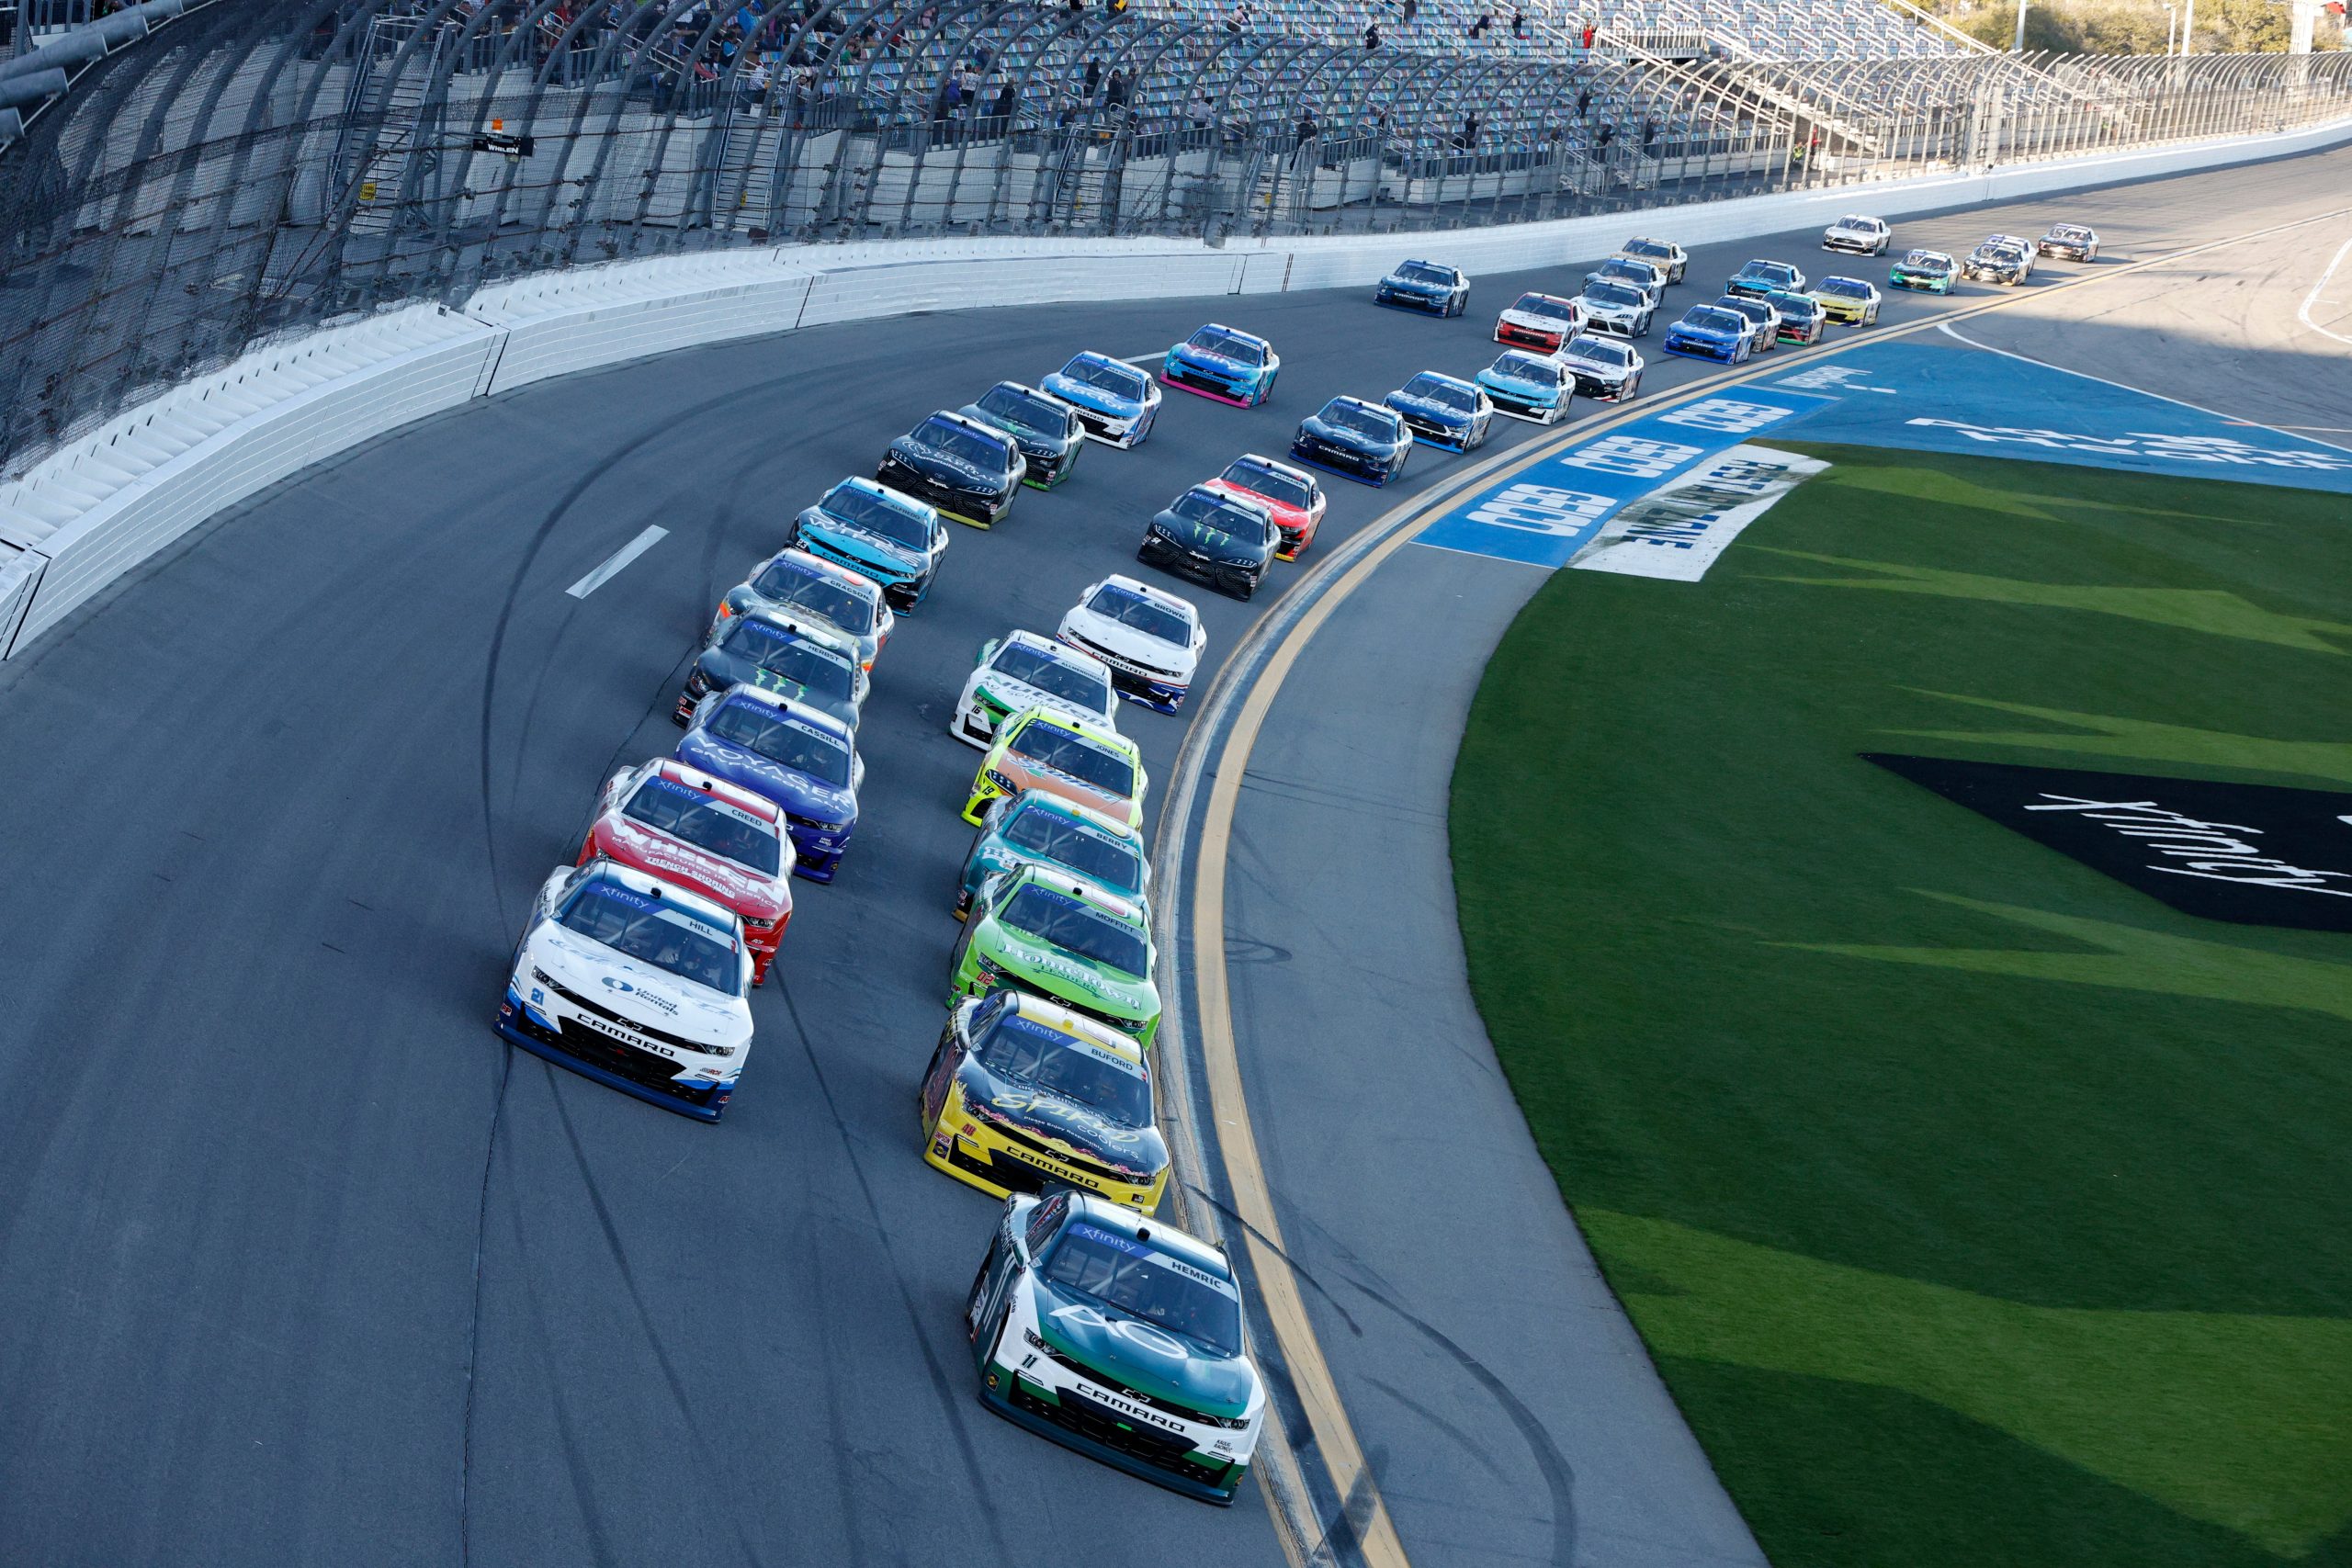 NASCAR Xfinity Series cars line up to start at Daytona International Speedway in 2022